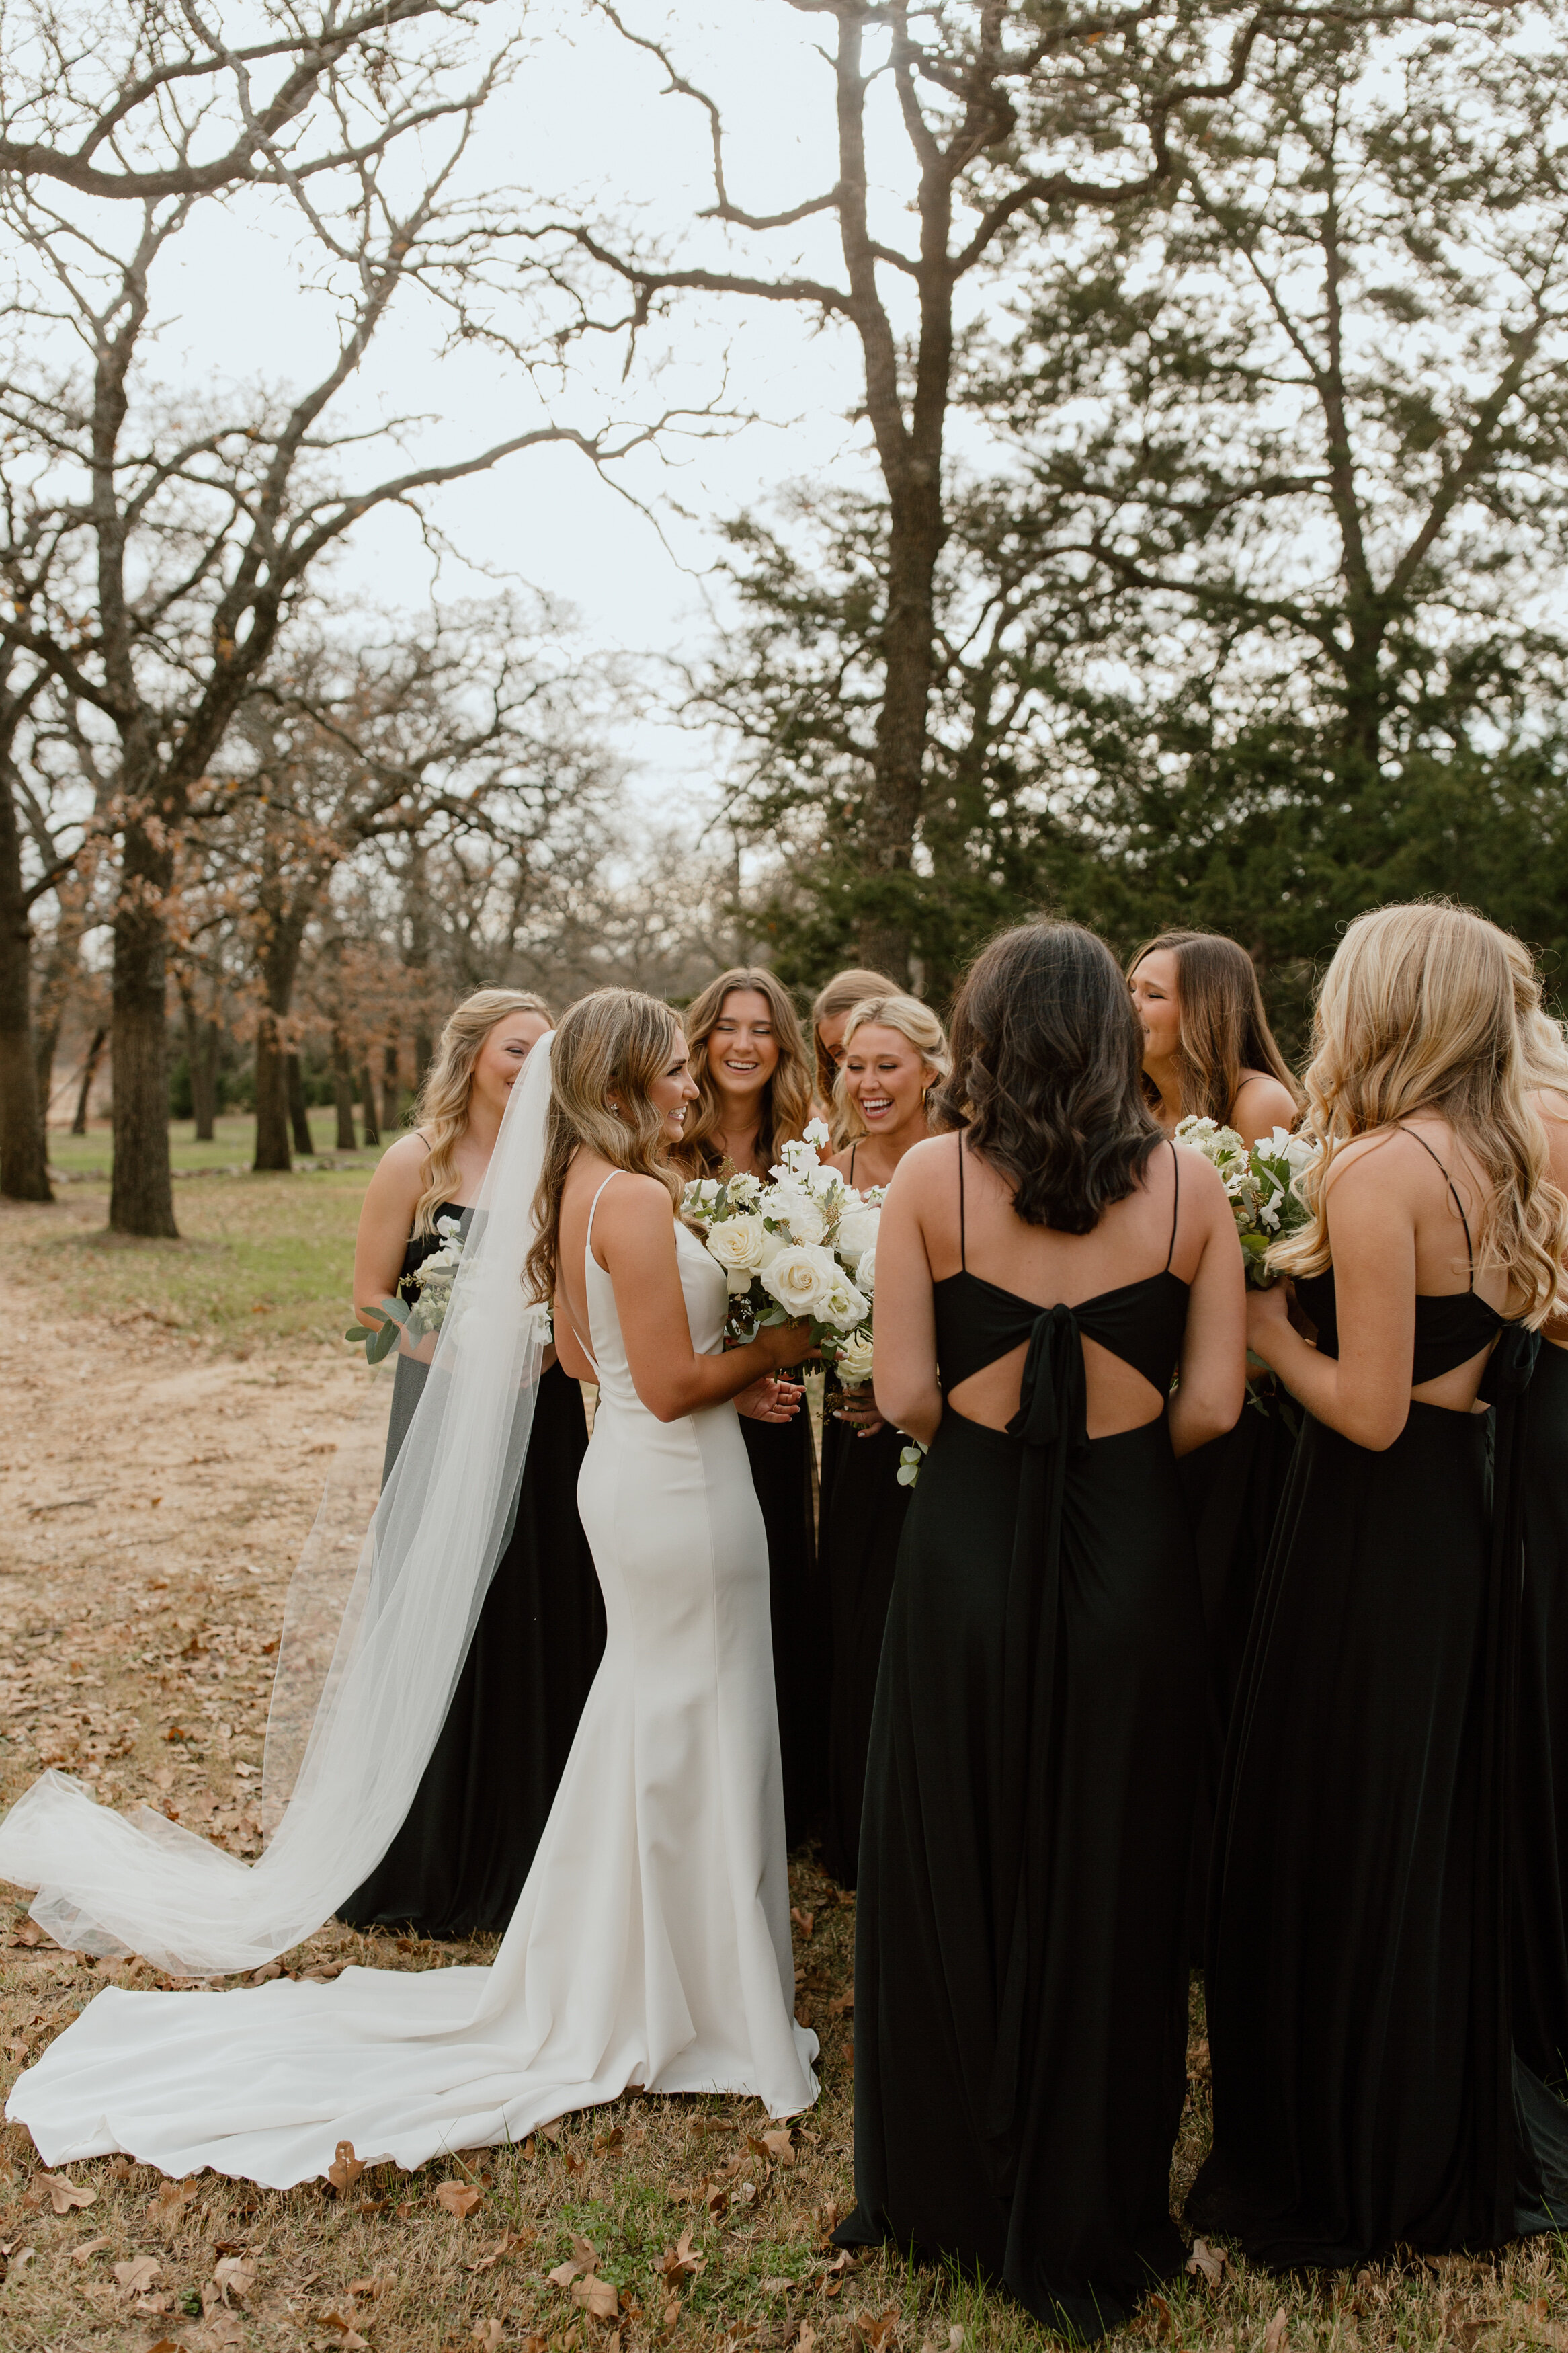  Rebecca Schoneveld Celine Wedding Dress a&amp;be bridal shop dallas texas 